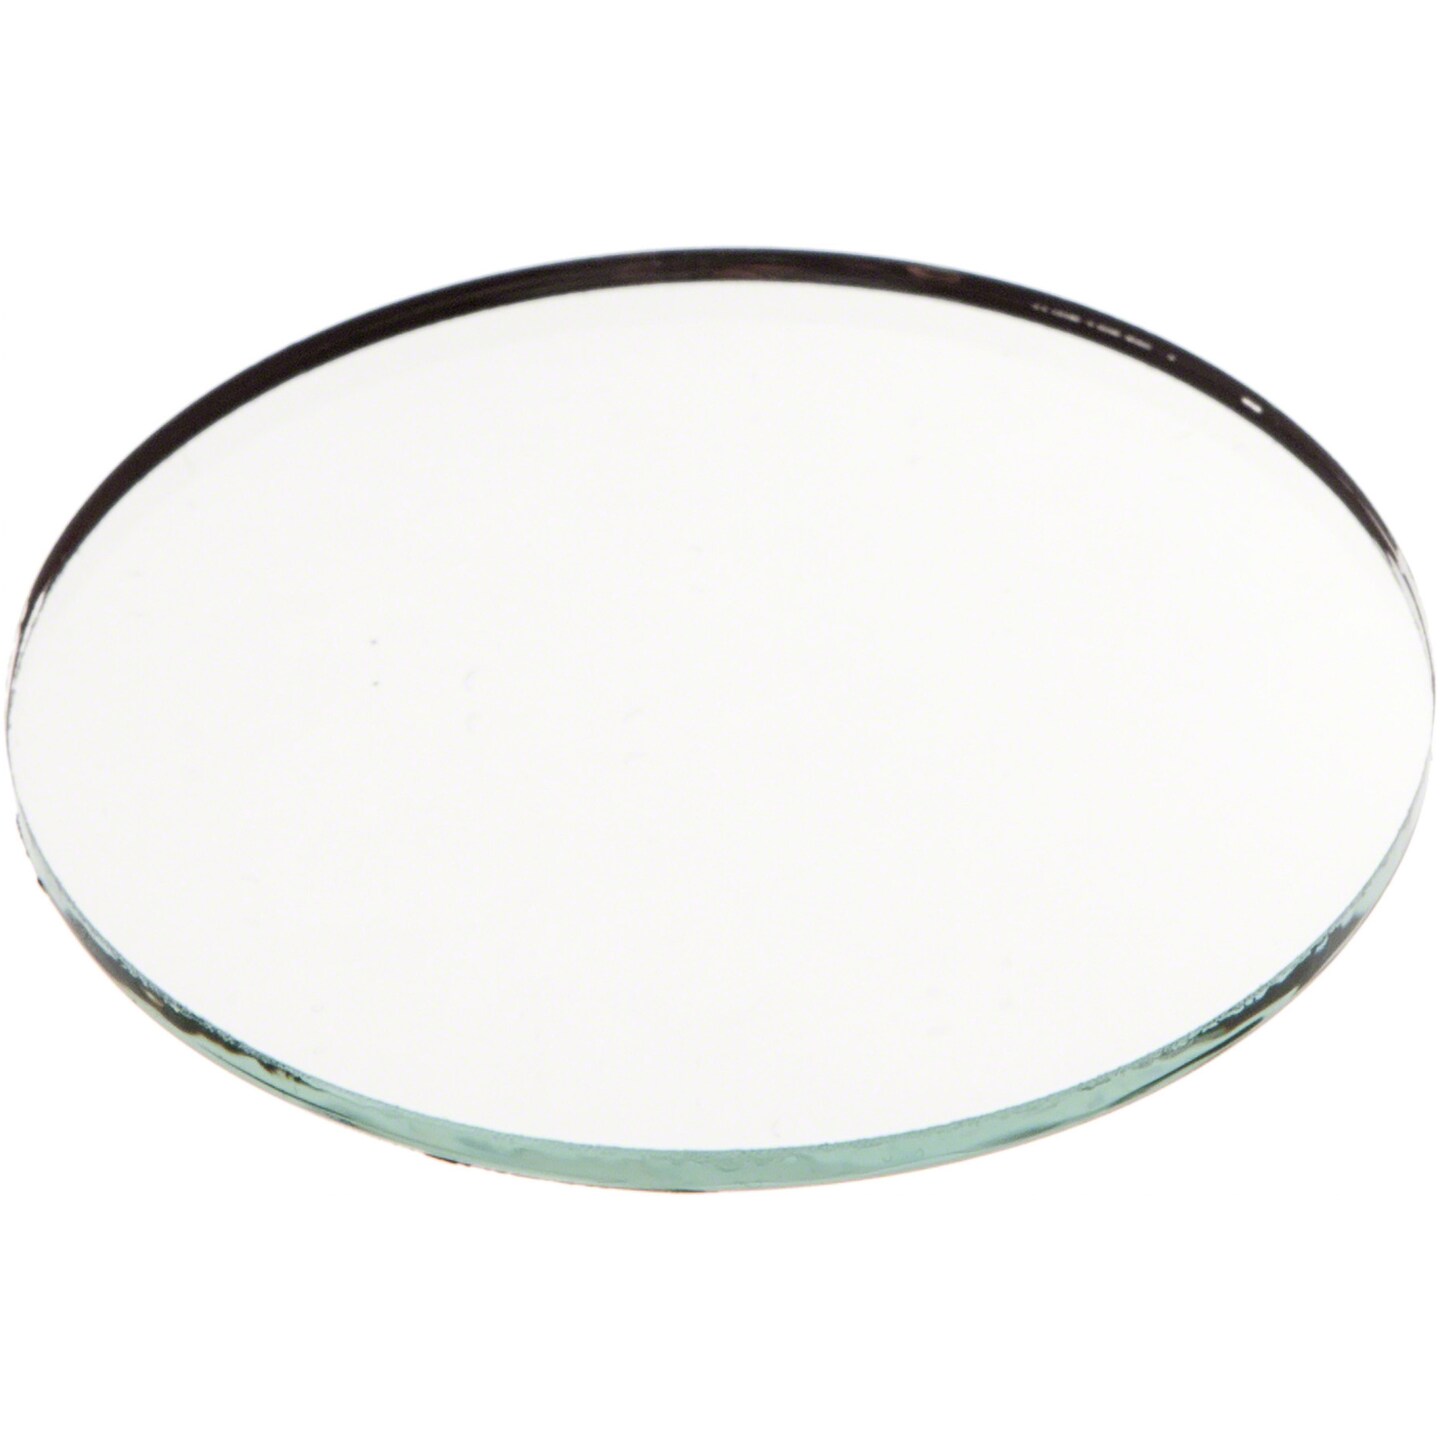 Plymor Round 3mm Non-Beveled Glass Mirror, 3 inch x 3 inch